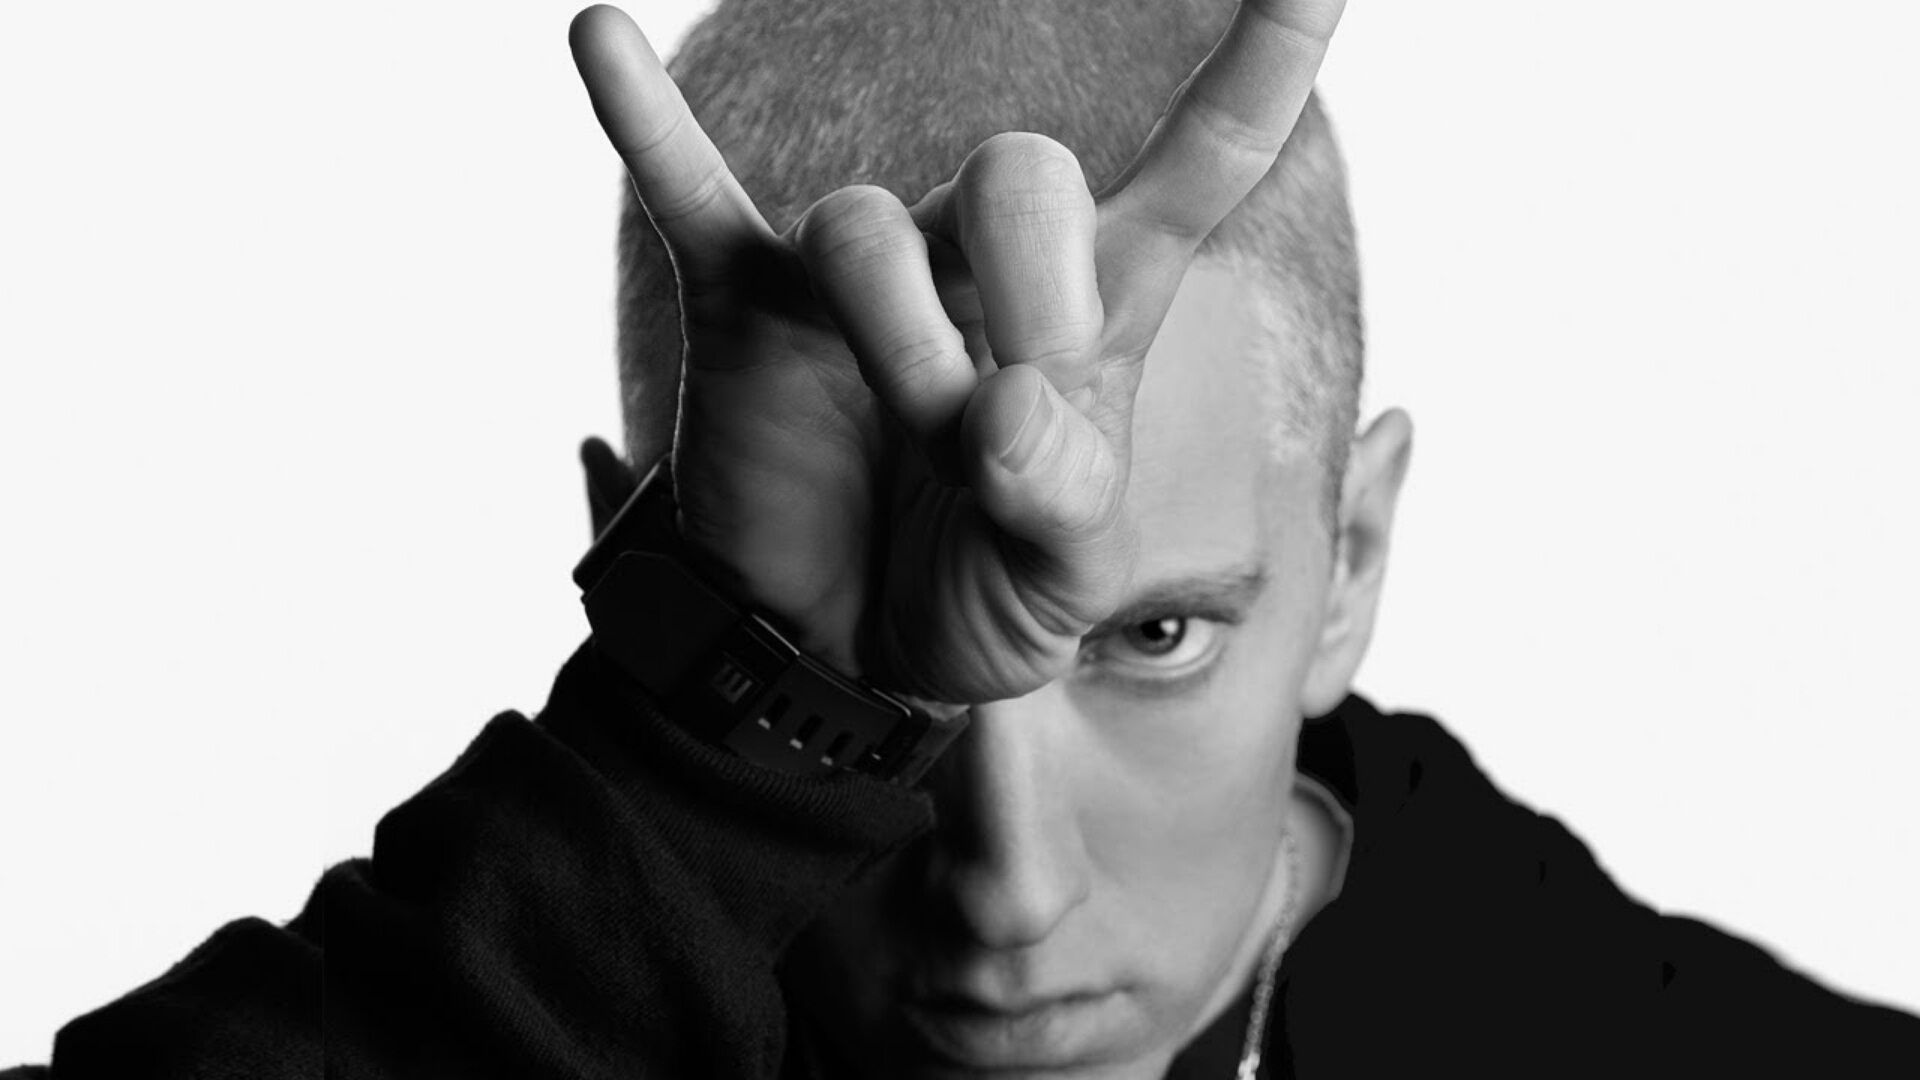 100+] Eminem Wallpapers | Wallpapers.com